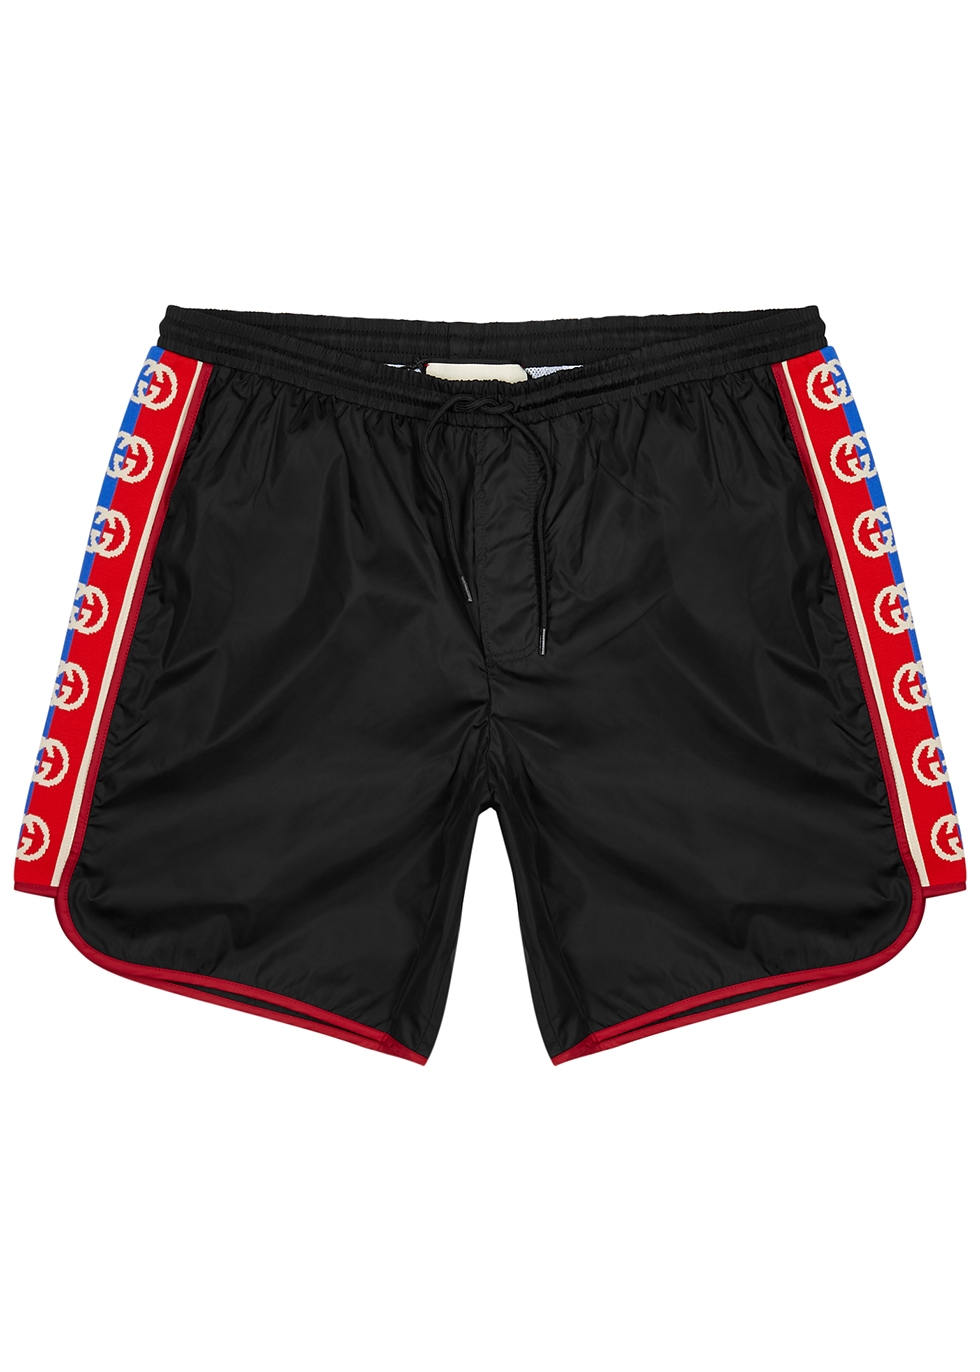 Gucci GG black shell swim shorts 